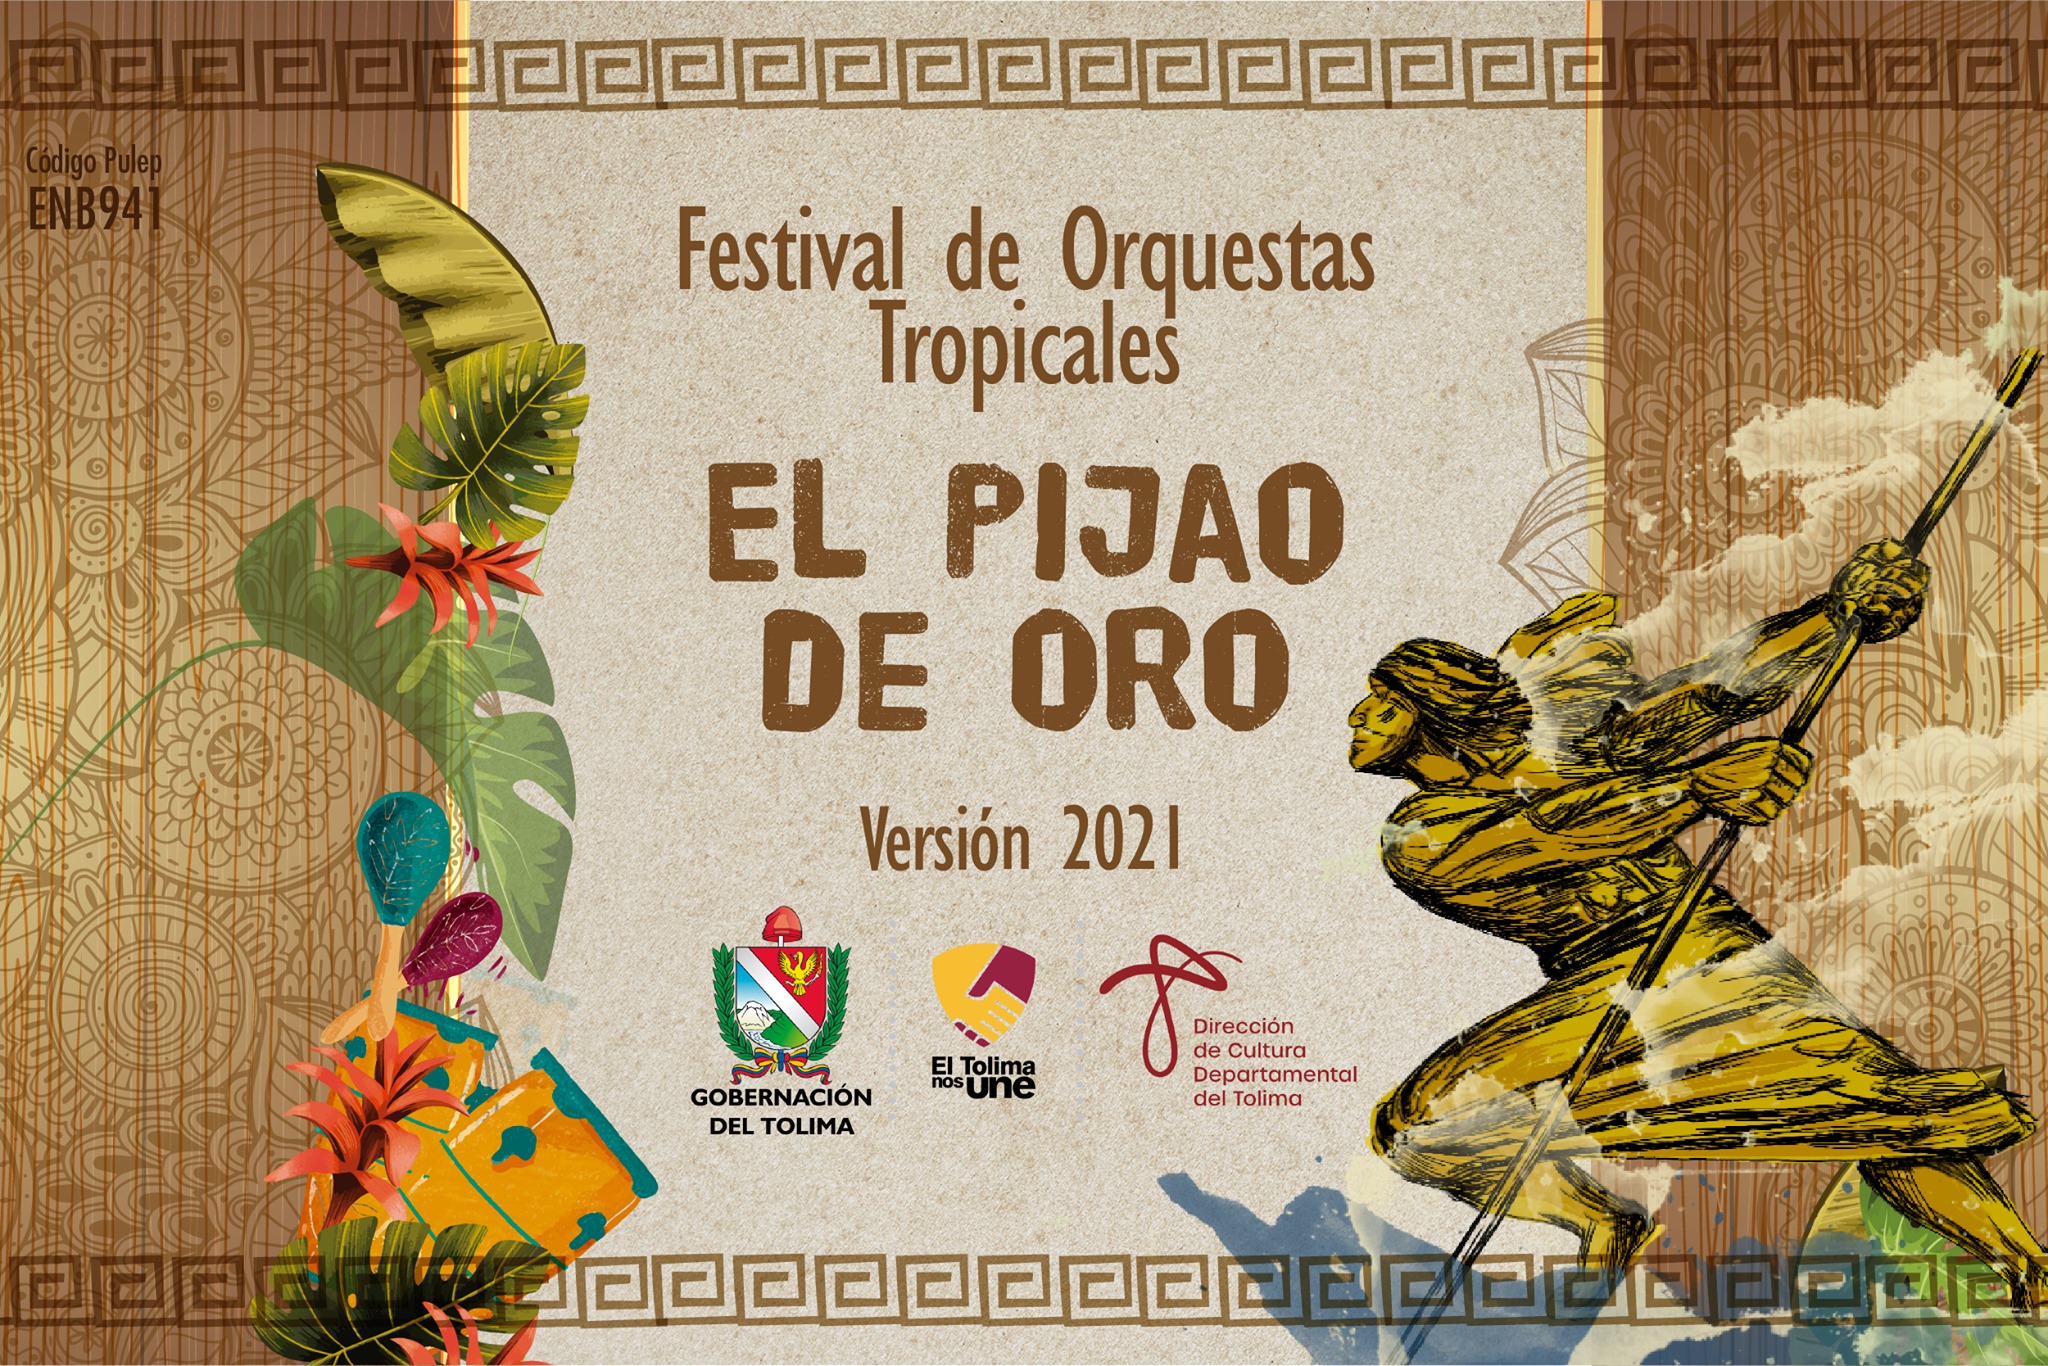 Prográmese este fin de semana para asistir al Festival de Orquestas Pijao de Oro